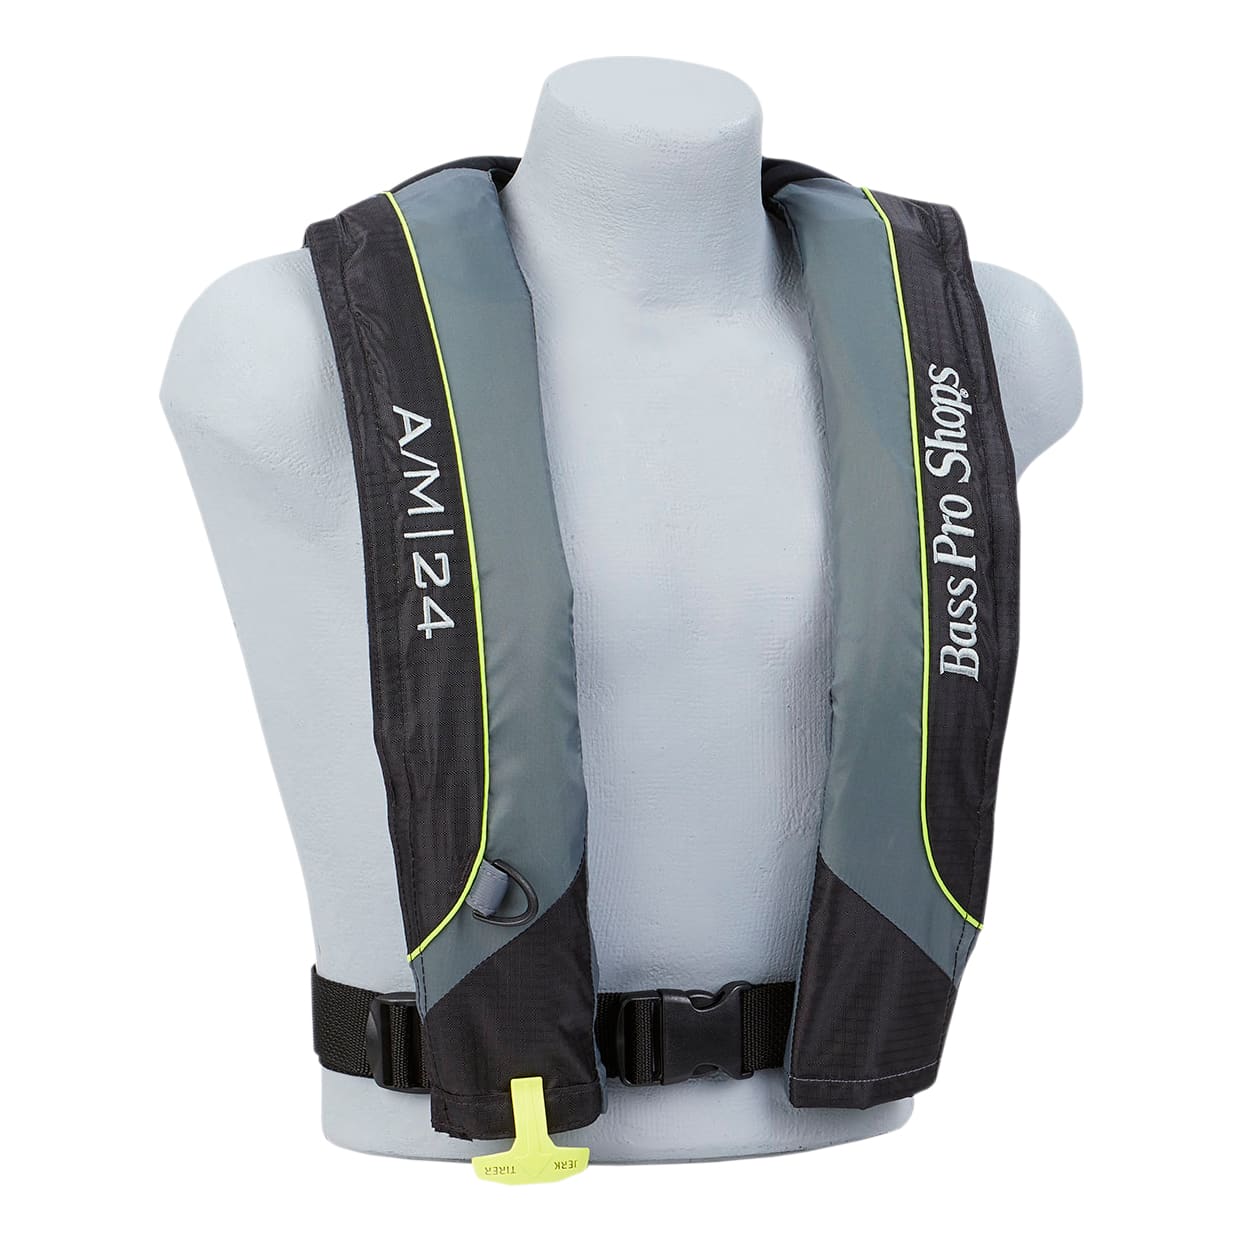 Bass Pro Shops® AM24 Auto/Manual Inflatable Life Vest - Green